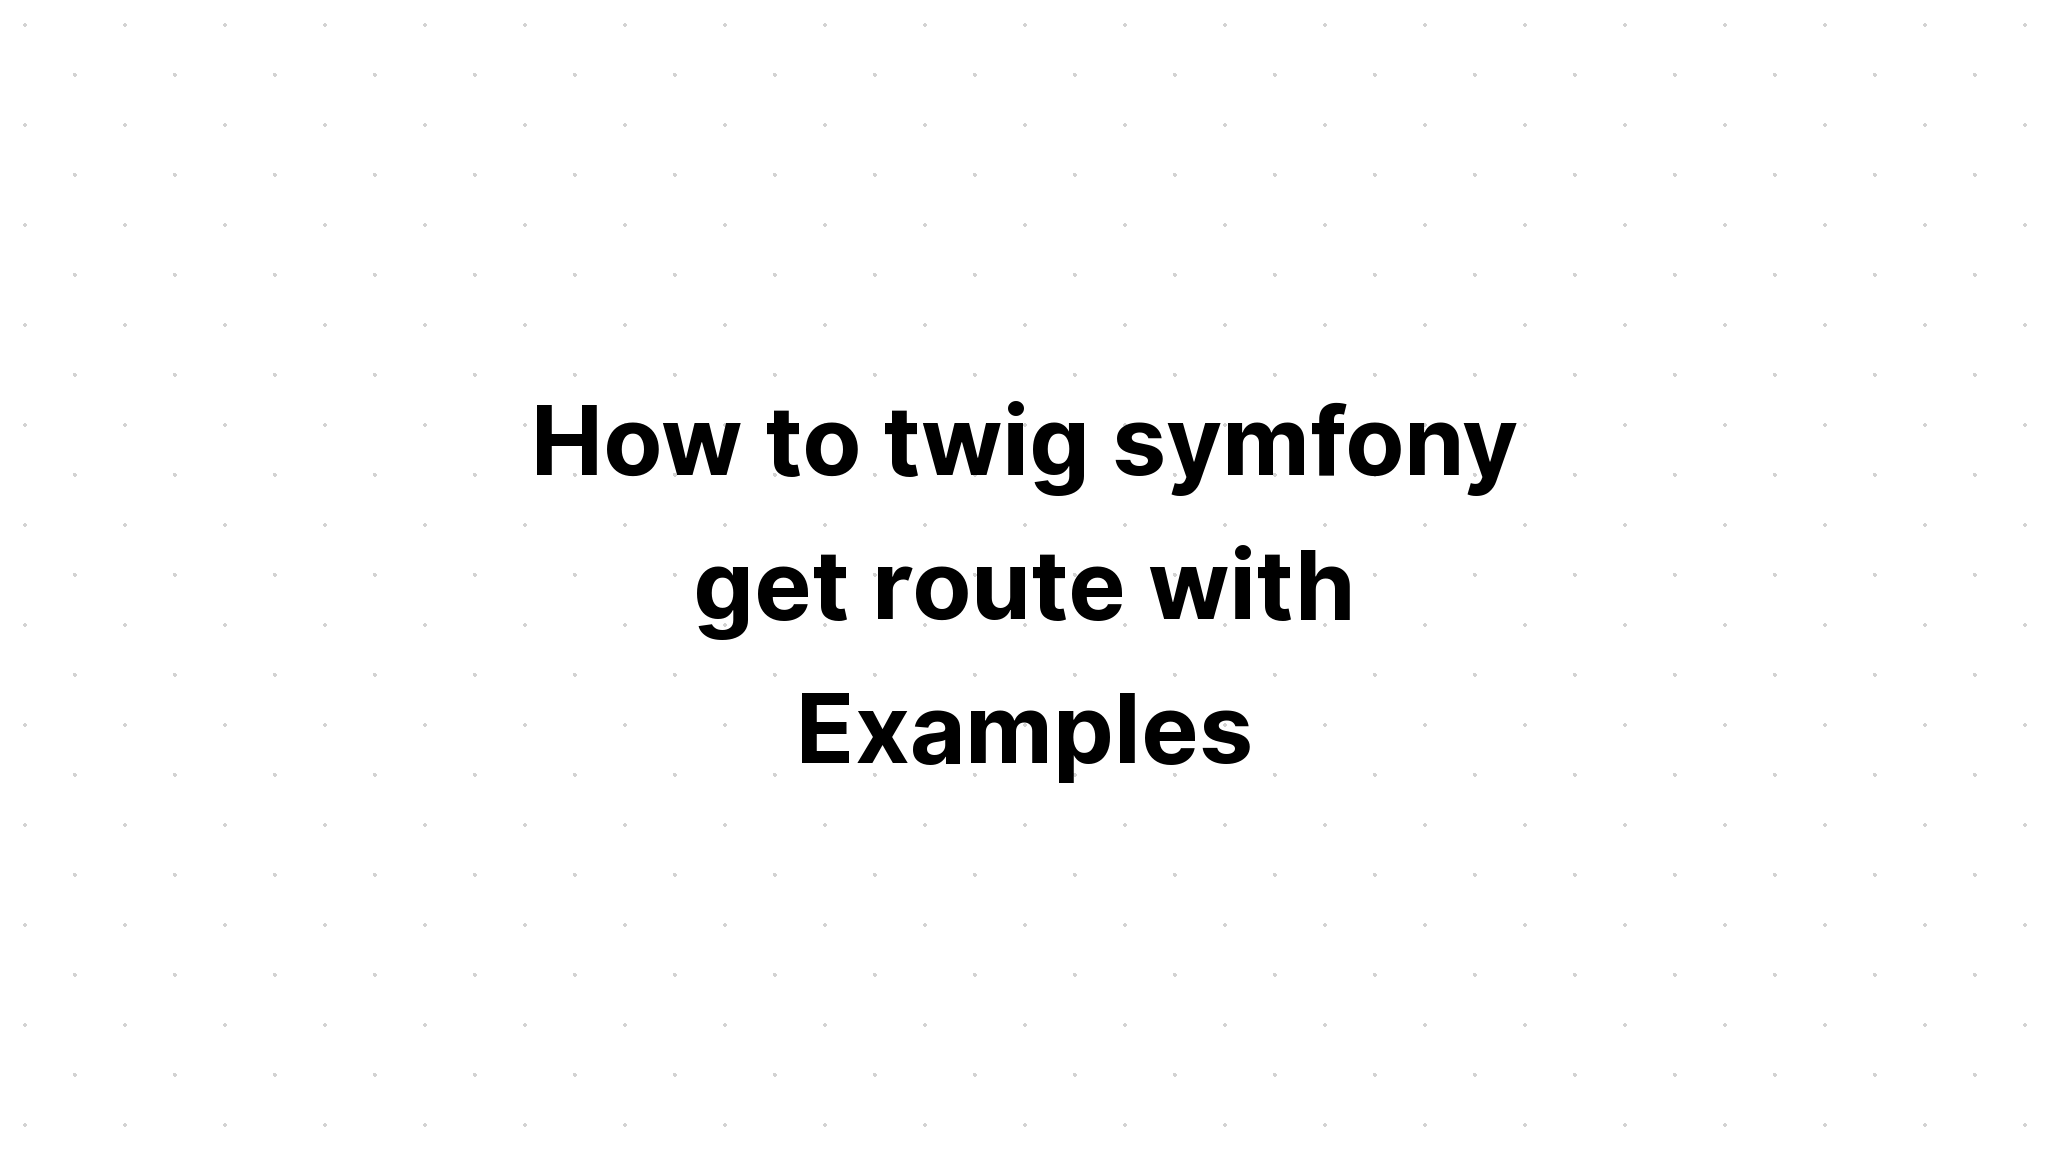 Cách twig symfony get route với các ví dụ